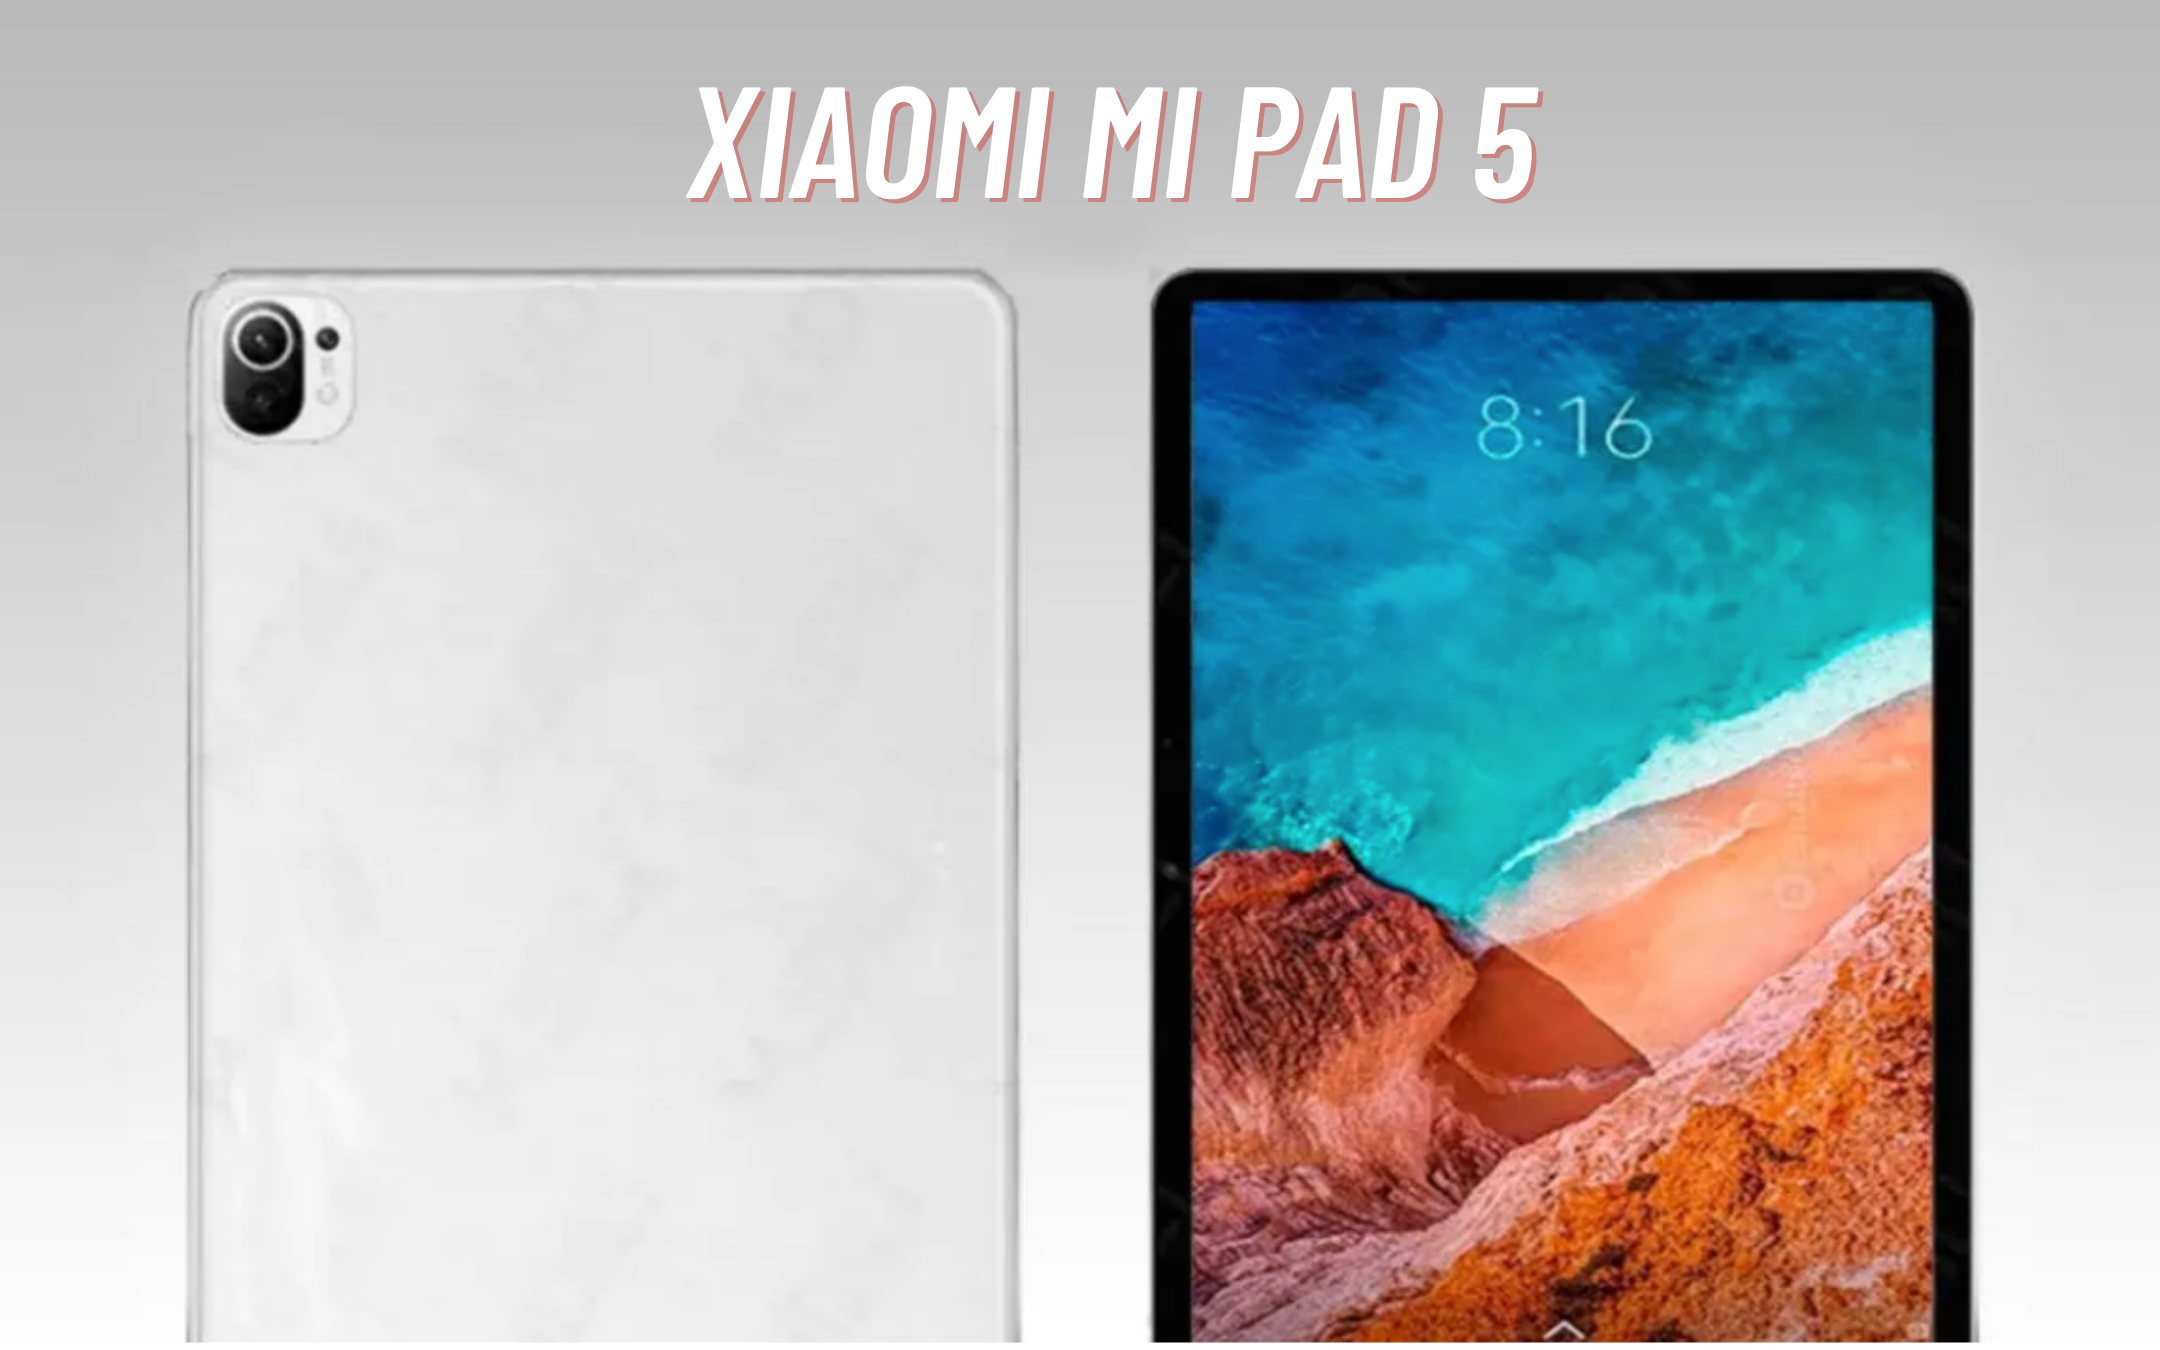 Xiaomi Pad 5: in Europa SOLD OUT in 10 minuti